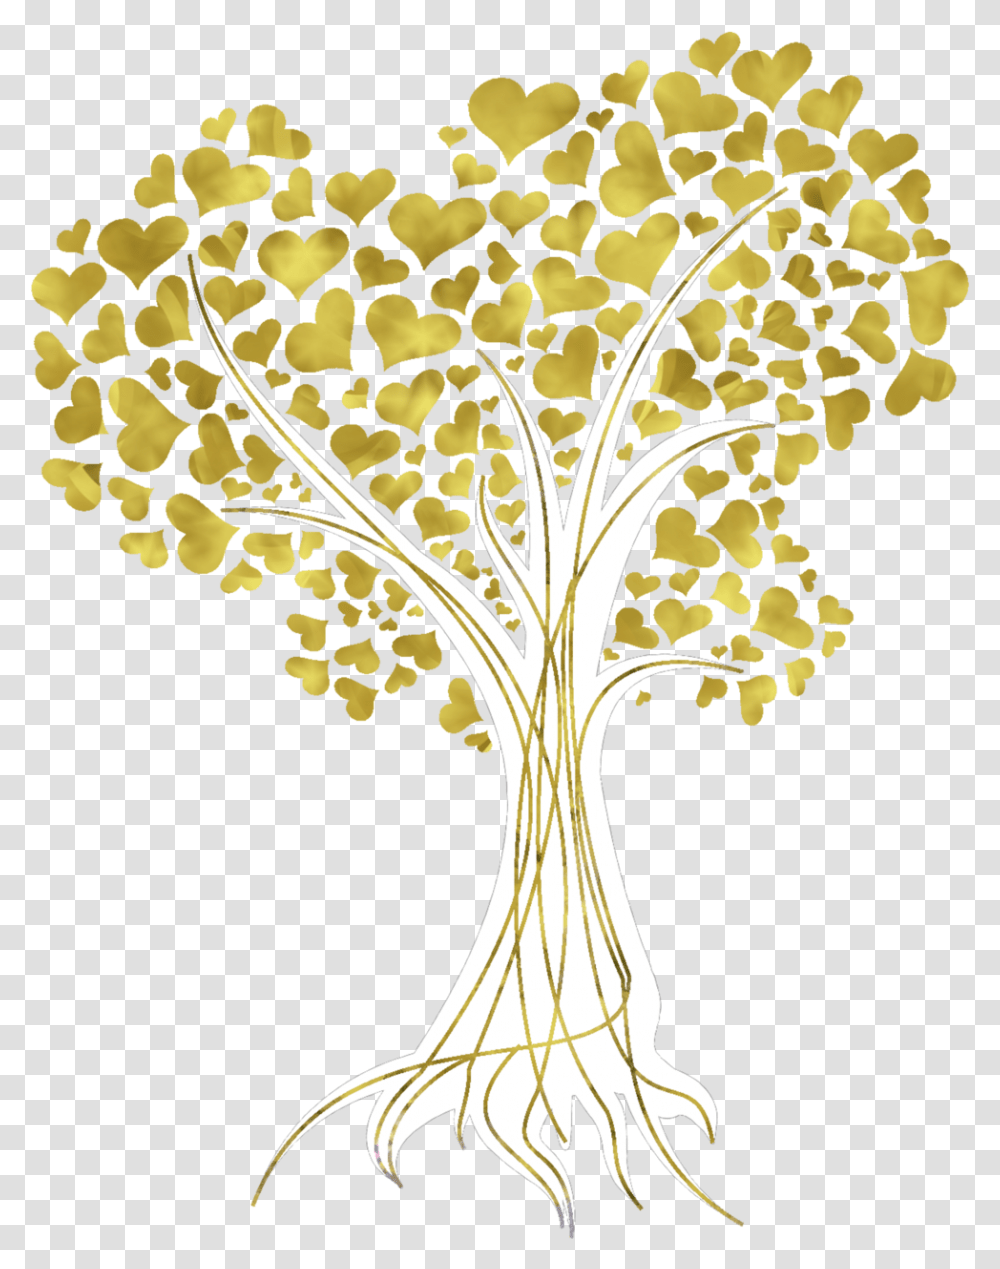 Tree Gold Autumn Leaf Color Clip Art Gold Tree Vector, Plant, Floral Design, Pattern Transparent Png